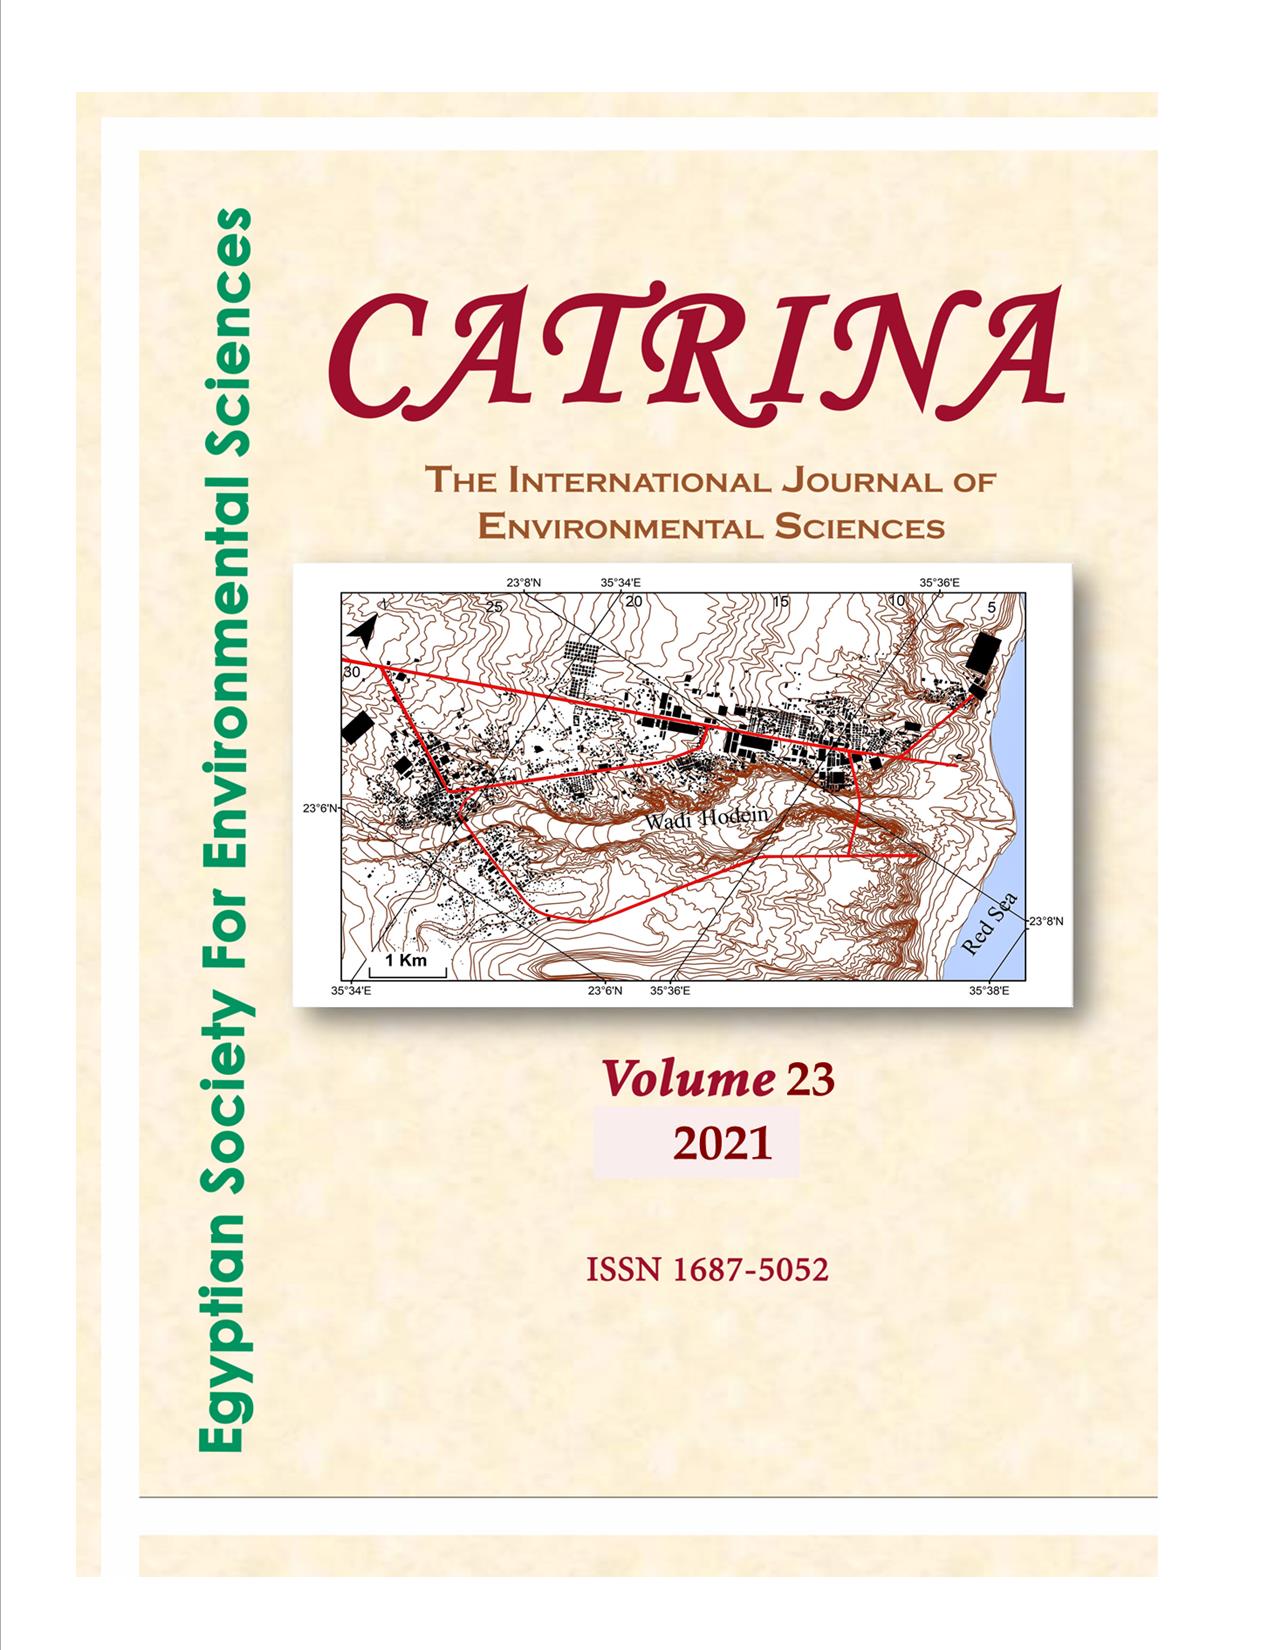 Catrina: The International Journal of Environmental Sciences